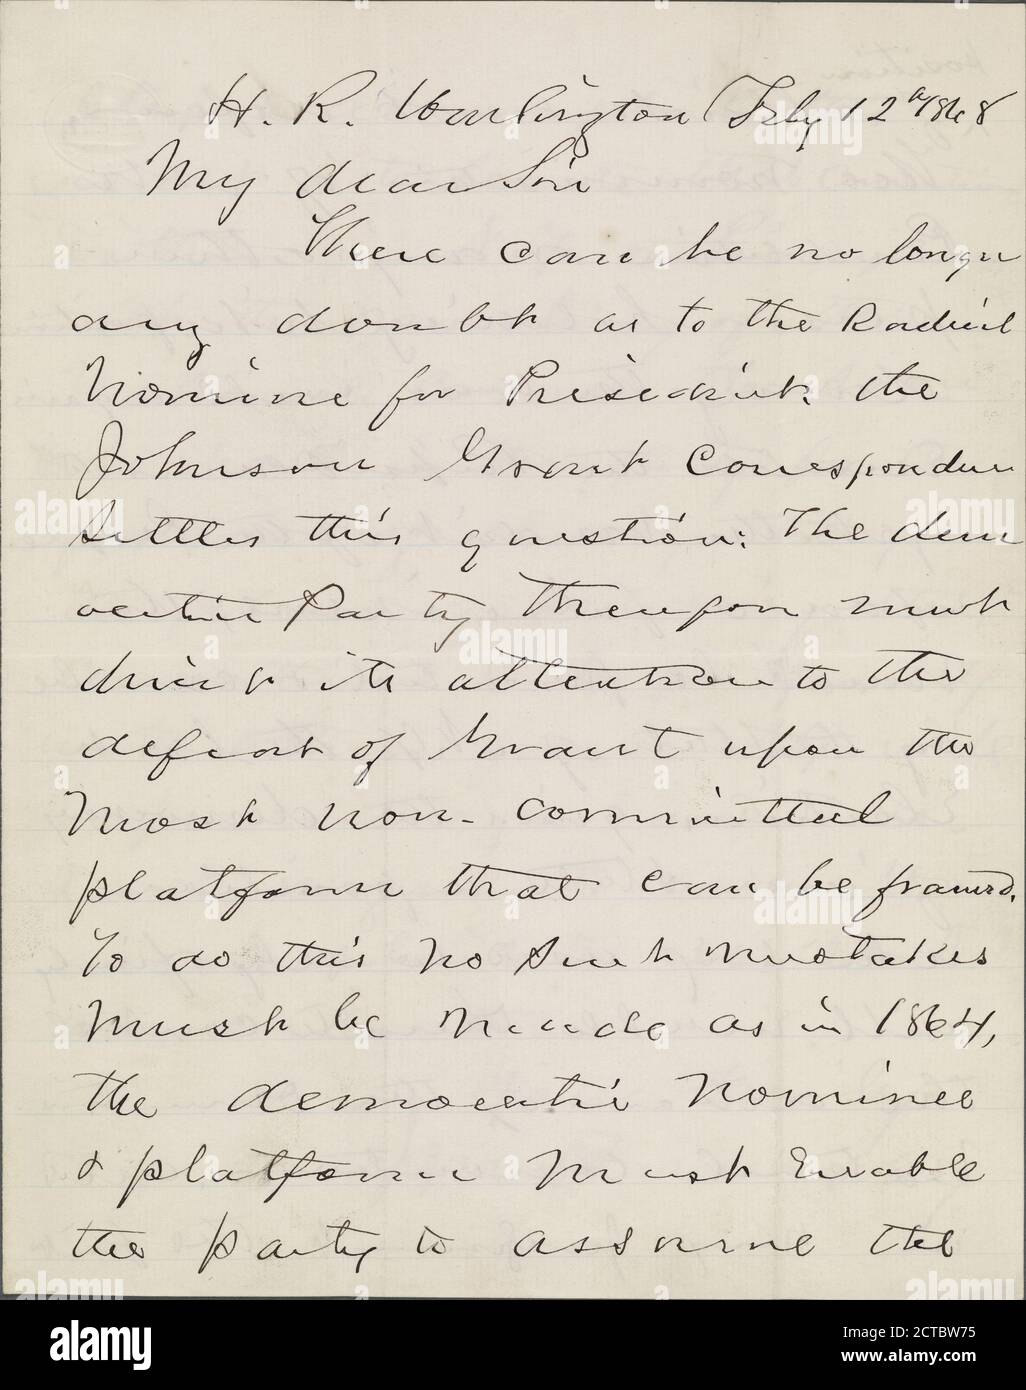 Humphrey, J., text, Correspondence, 1868 Stock Photo